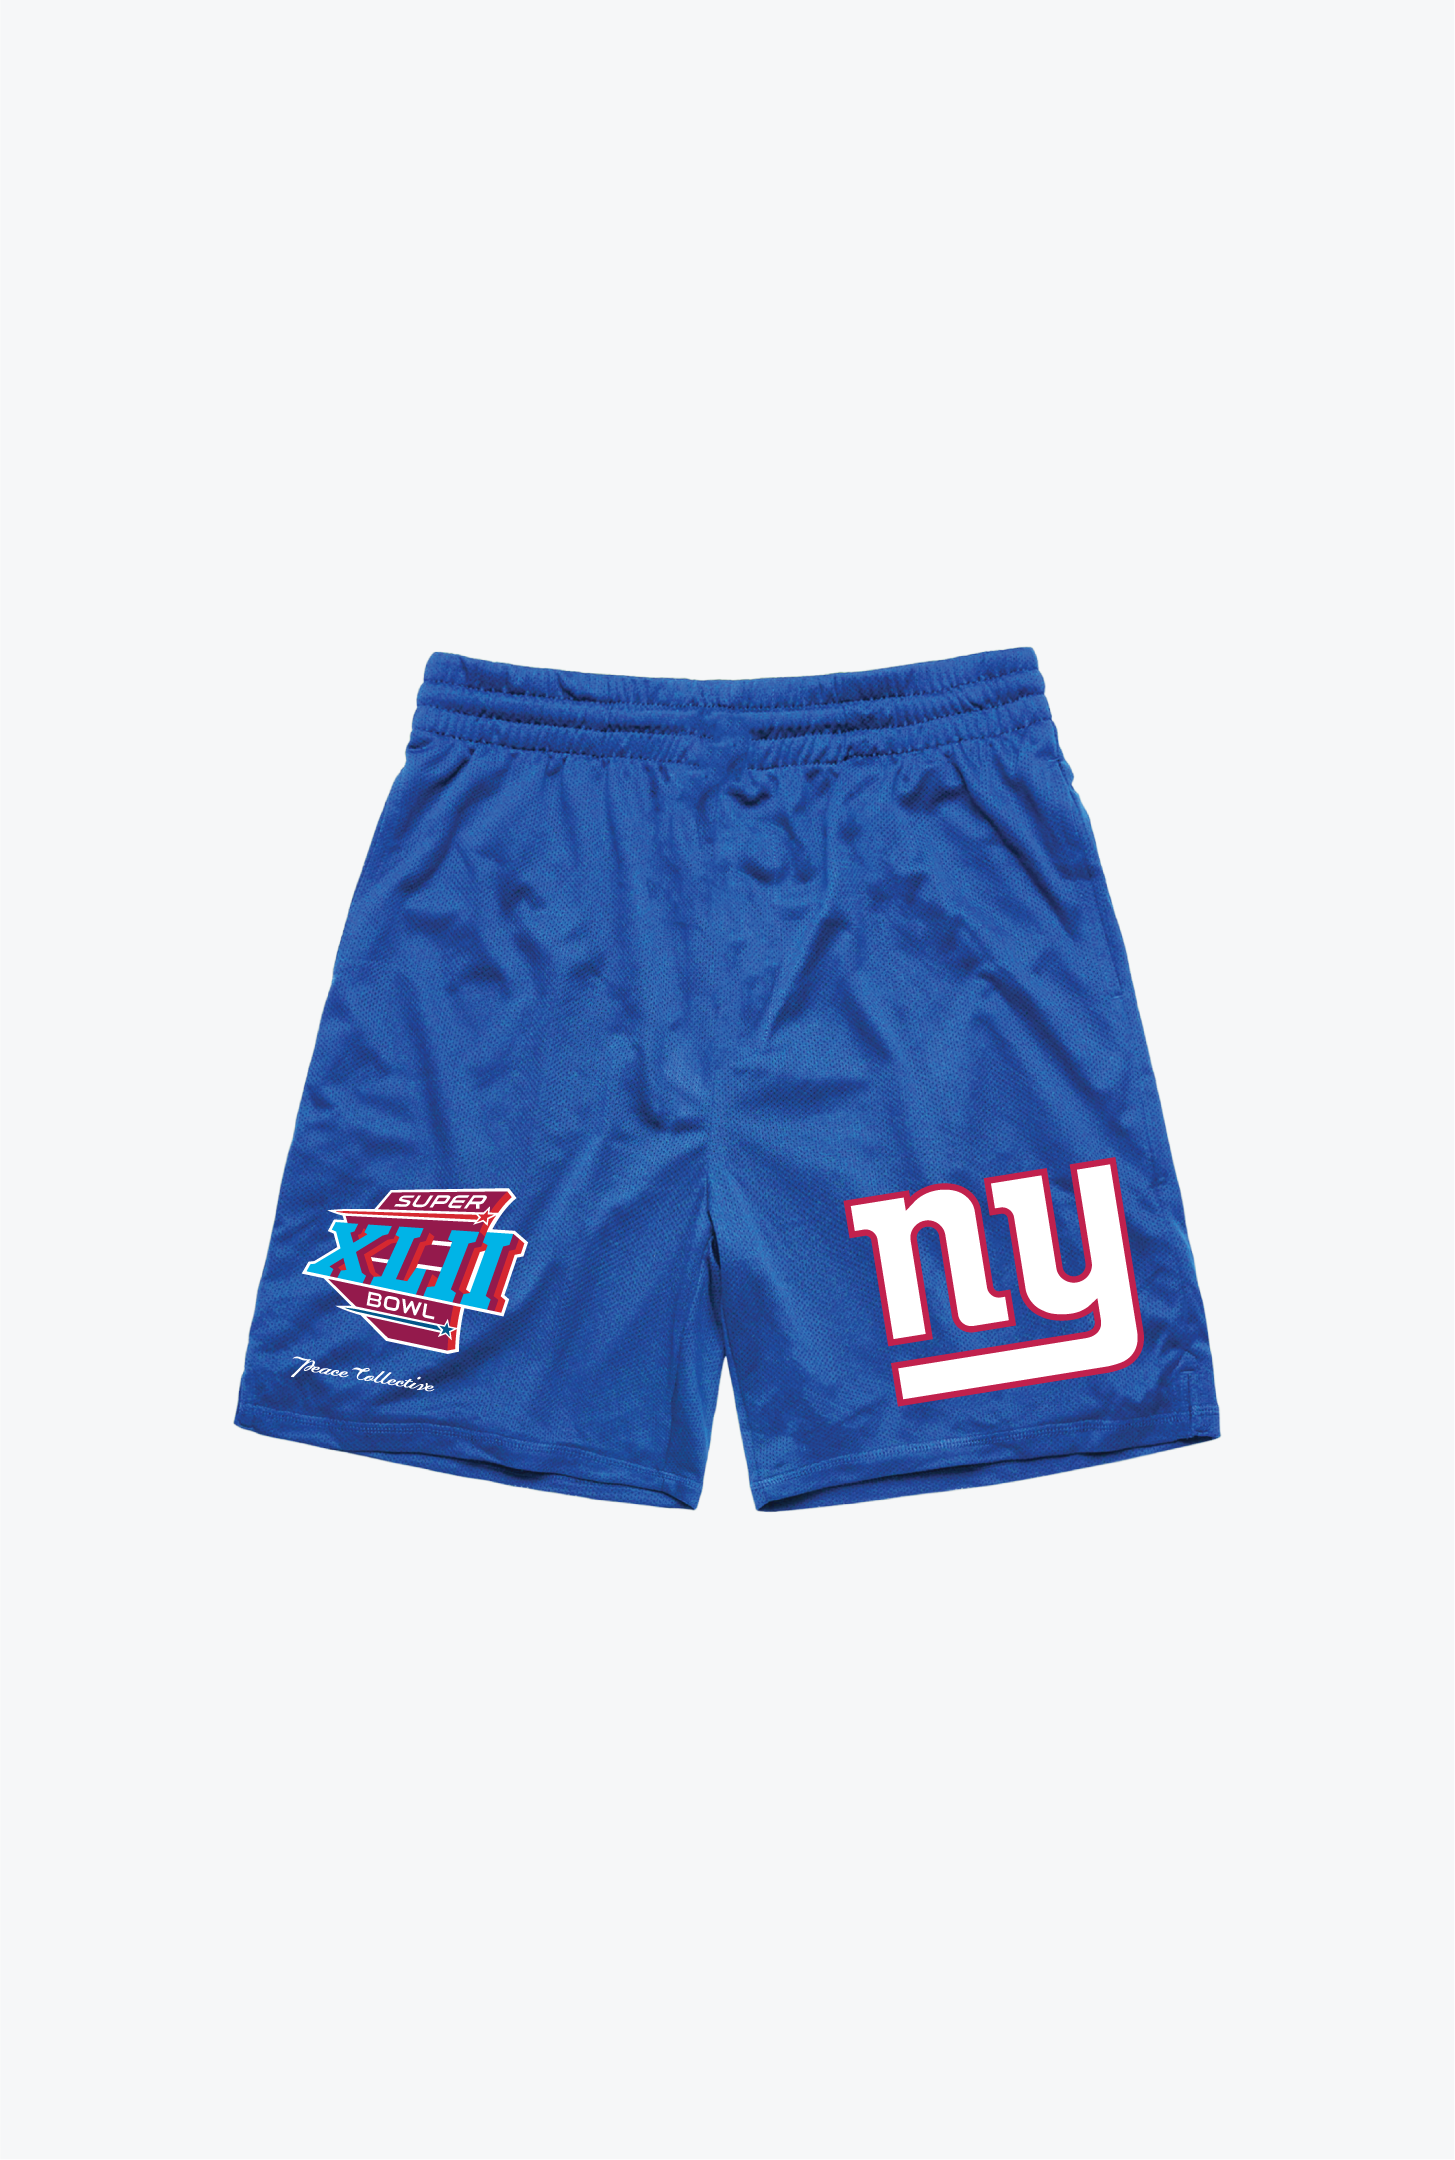 New York Giants Super Bowl XLII Mesh Shorts - Blue